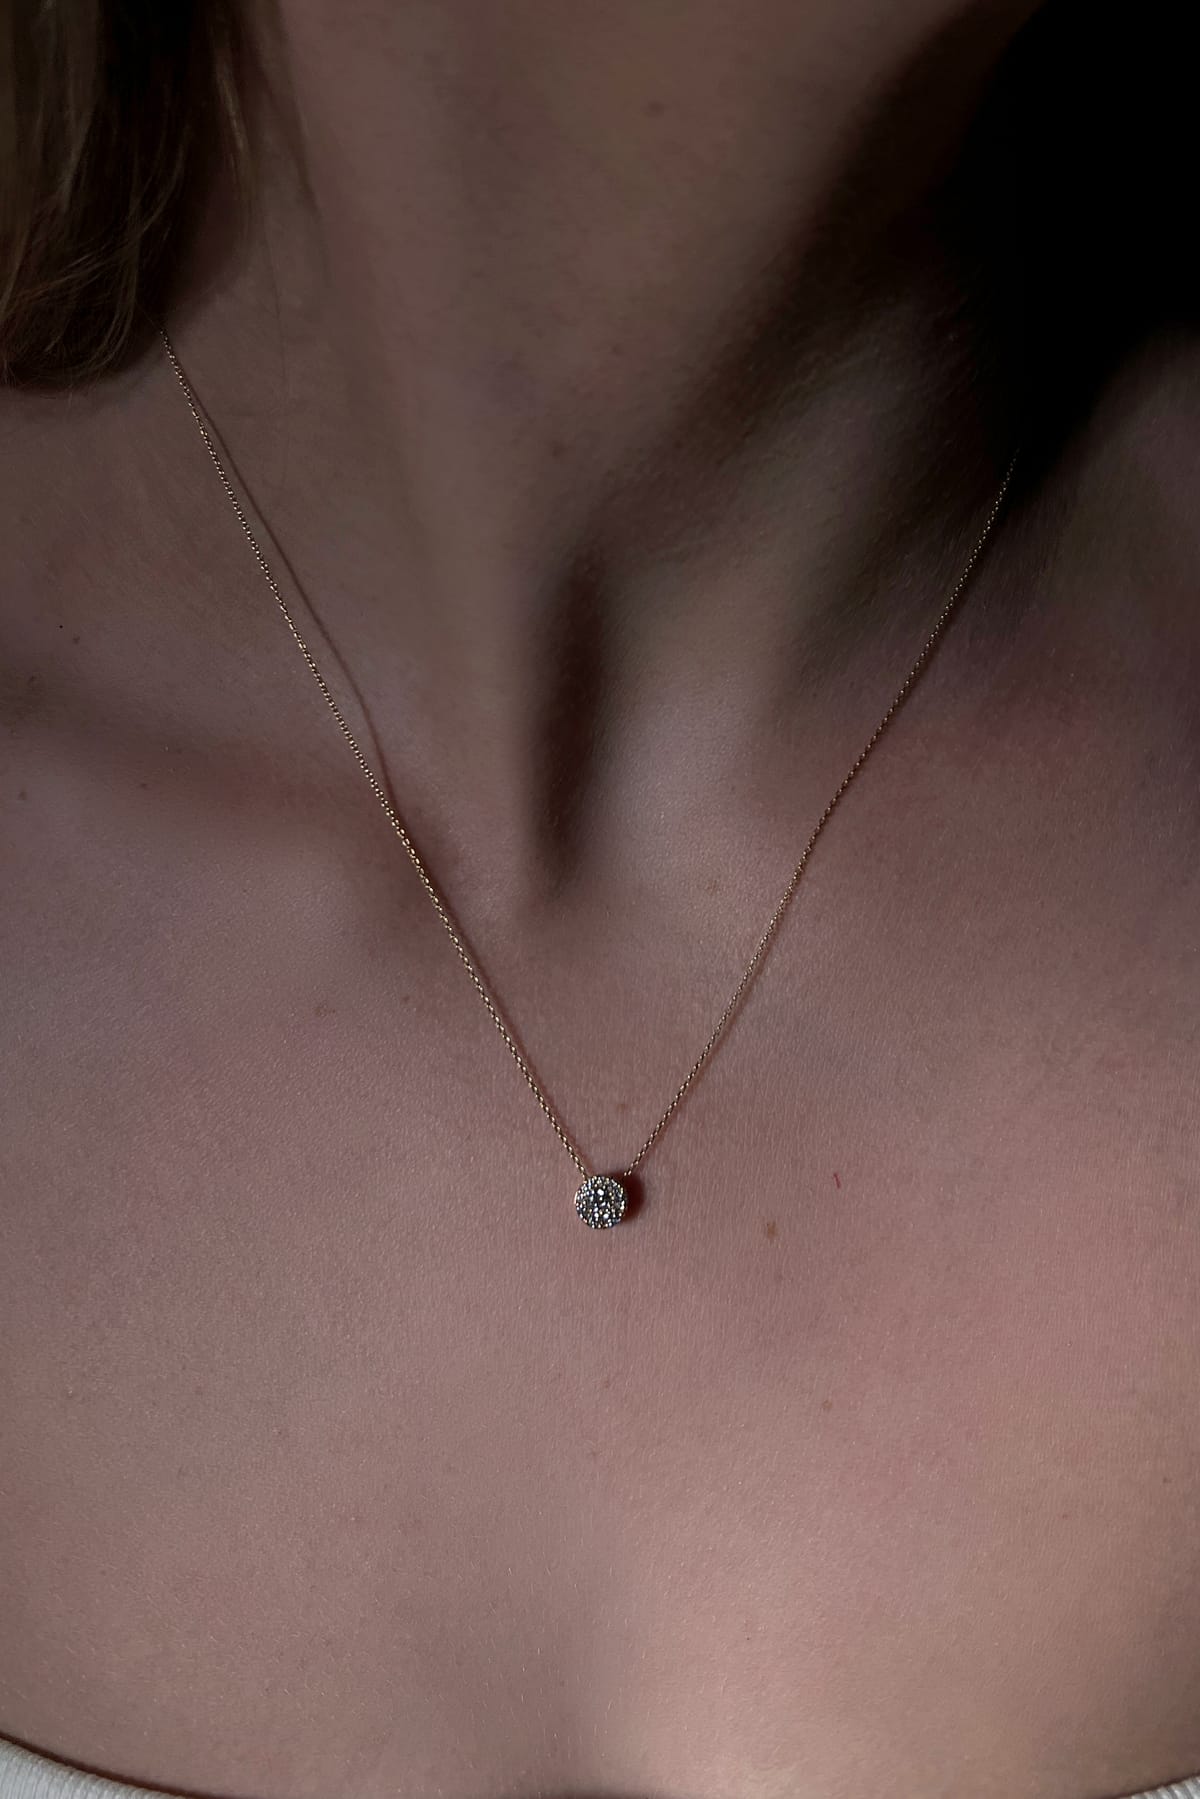 Tessa Diamond Circle Pendant From Hearts On Fire available at LeGassick Diamonds and Jewellery Gold Coast, Australia.